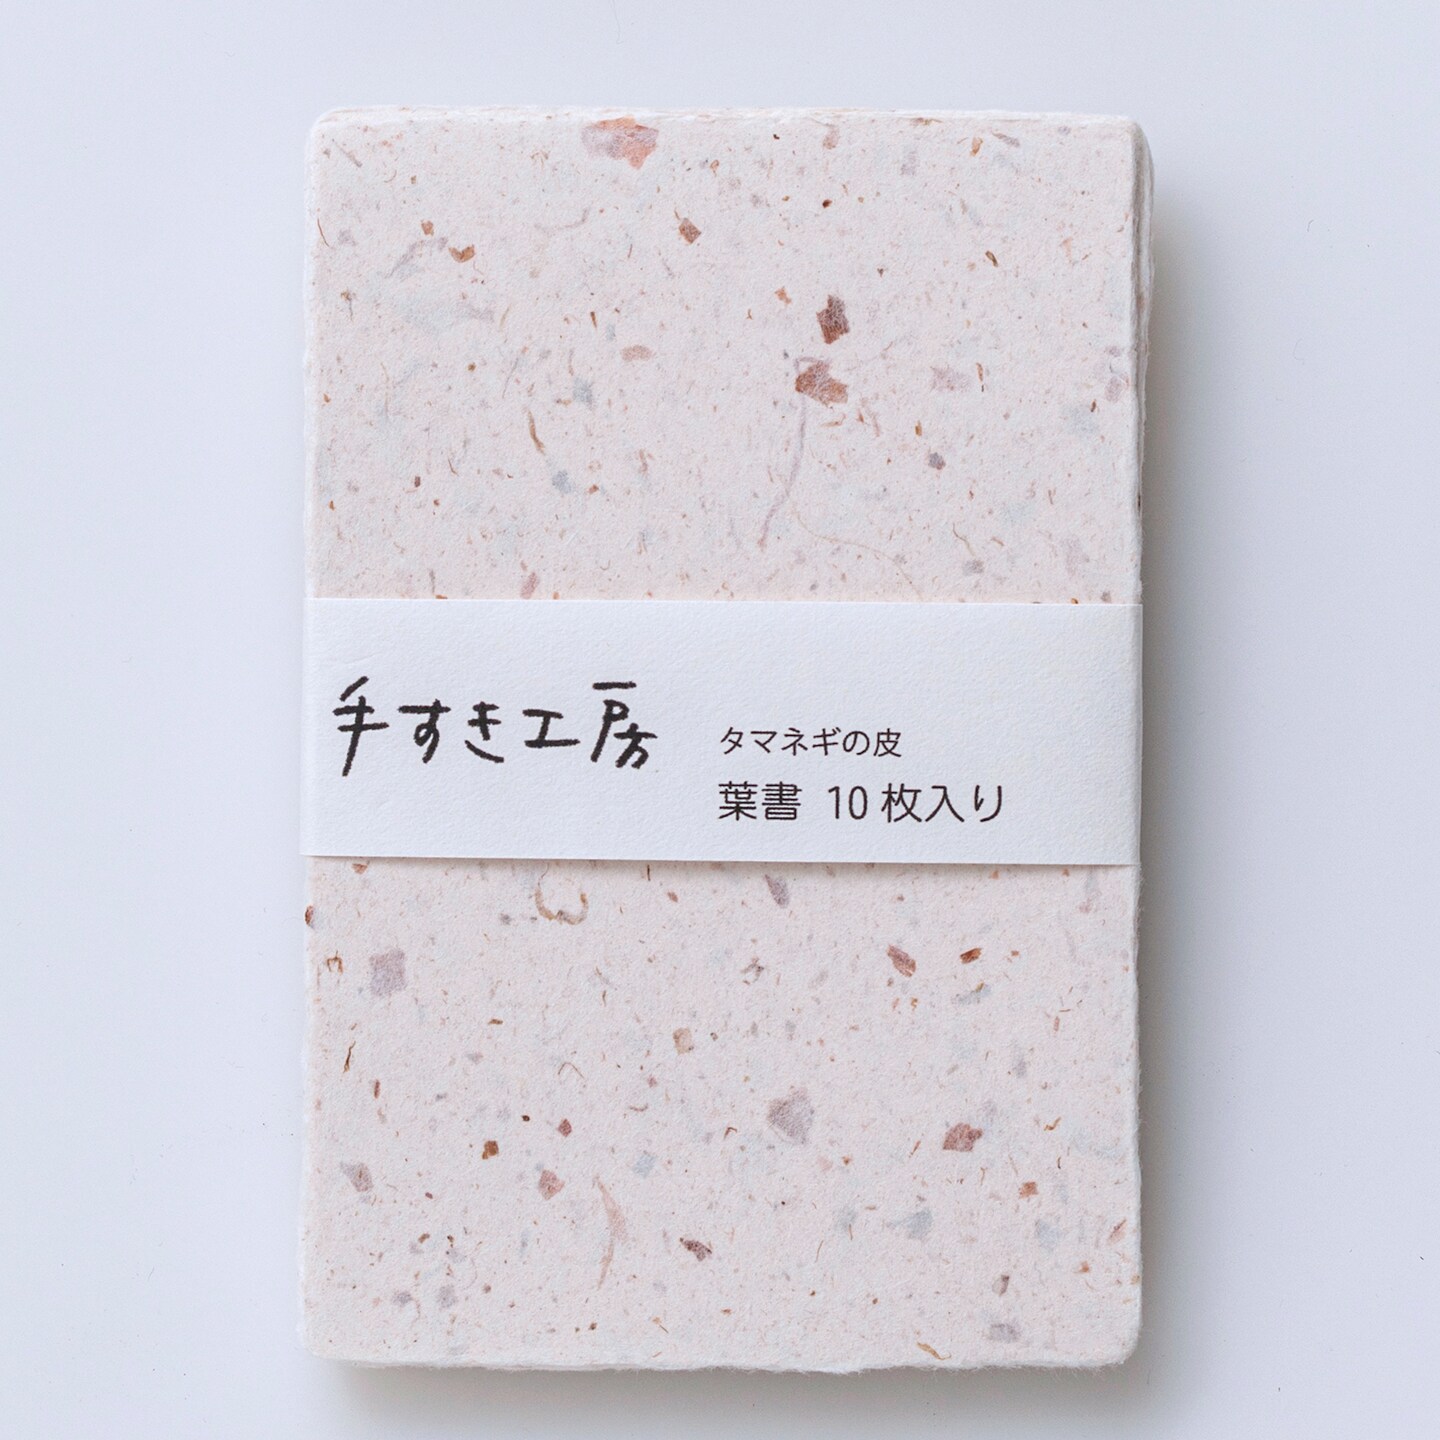 Awagami Thick Infused Handmade Postcard Set, 10 Postcards, Onion